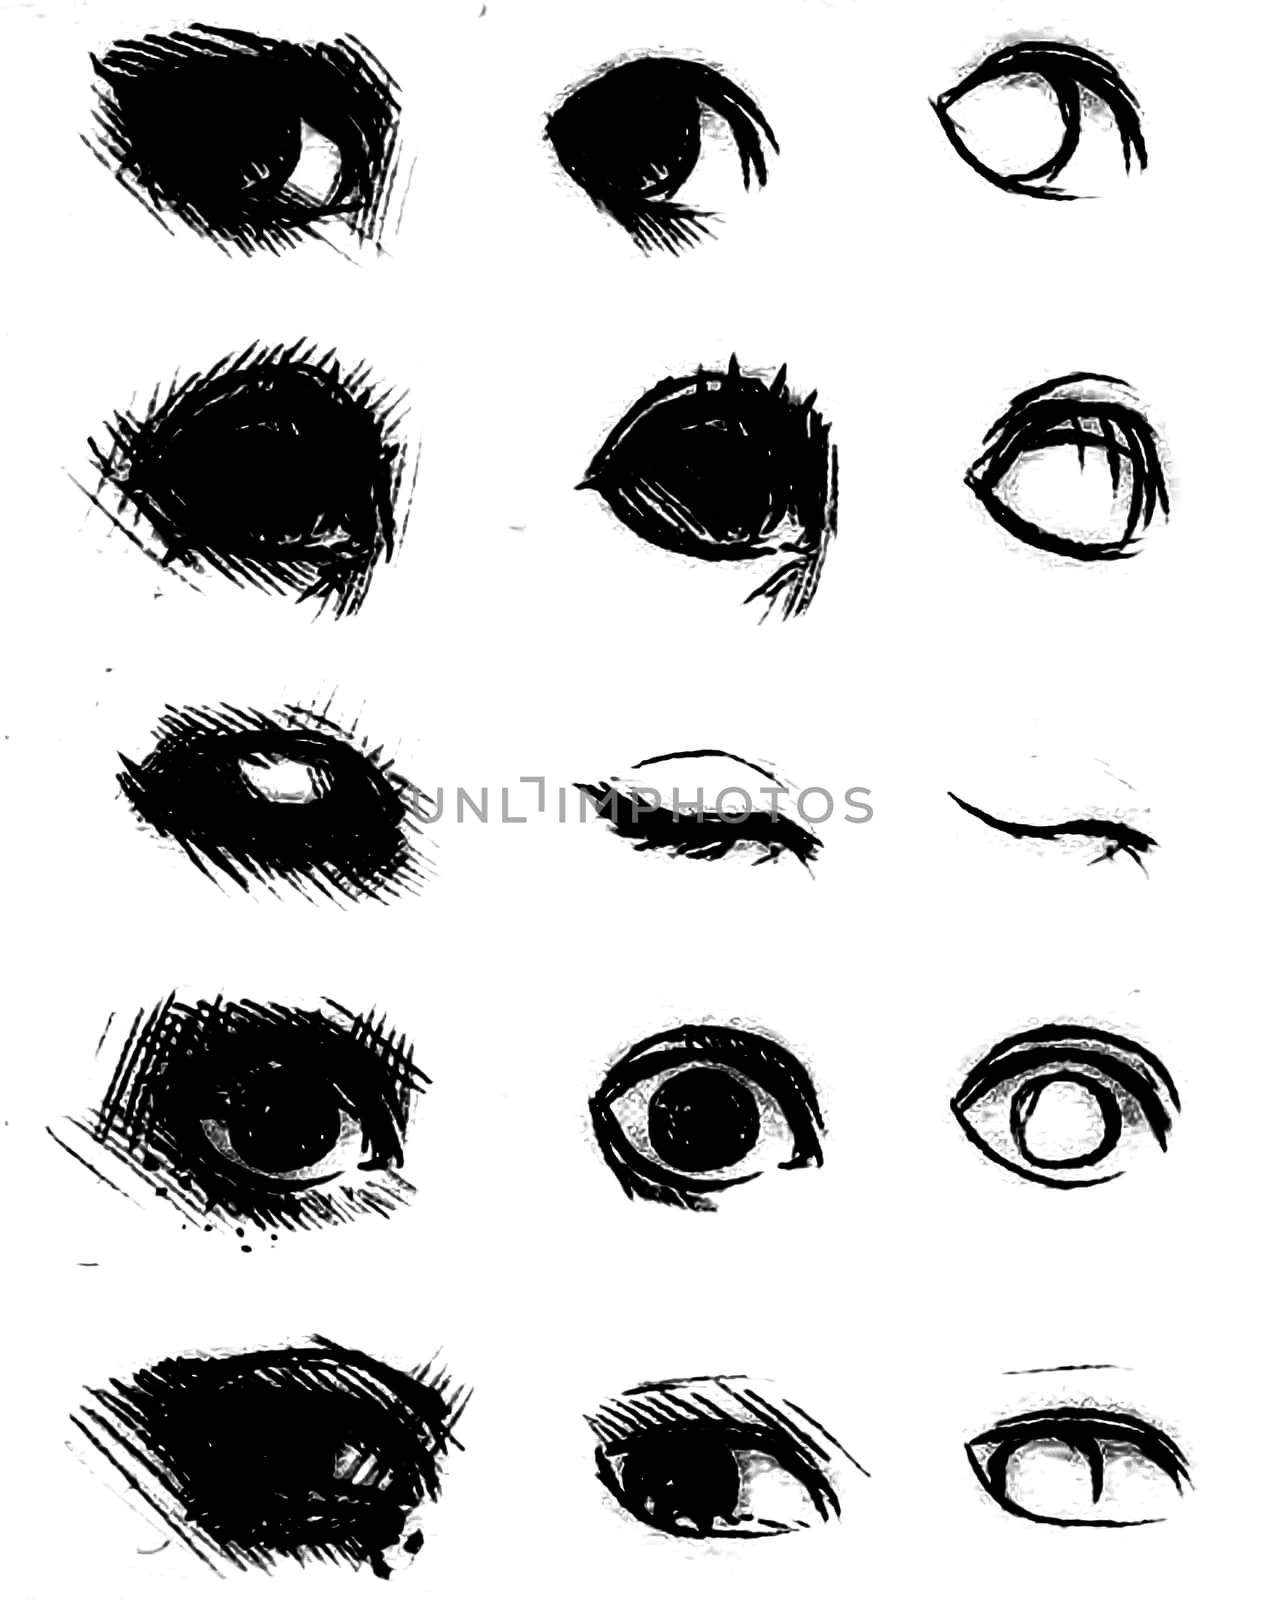 Tutorial of drawing human eye. Eye in anime style. female eyelashes. by DePo